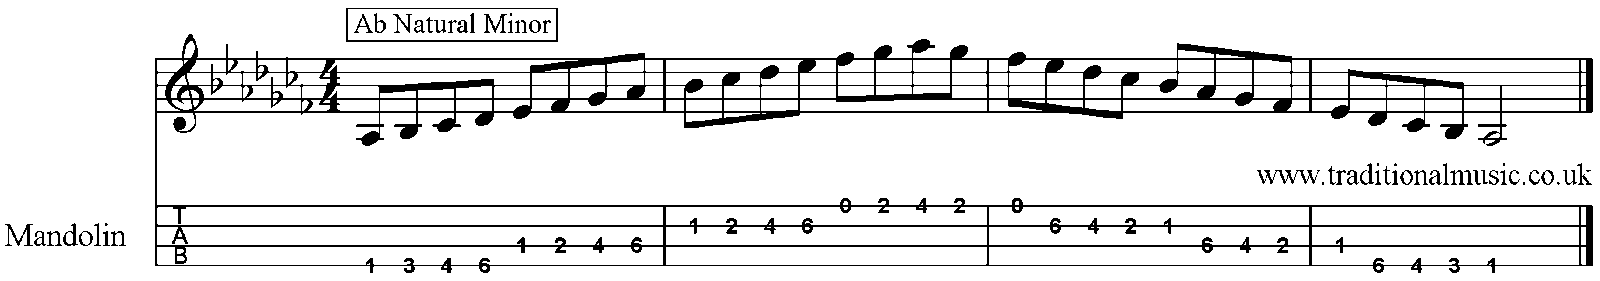 Minor Scales for Mandolin Ab